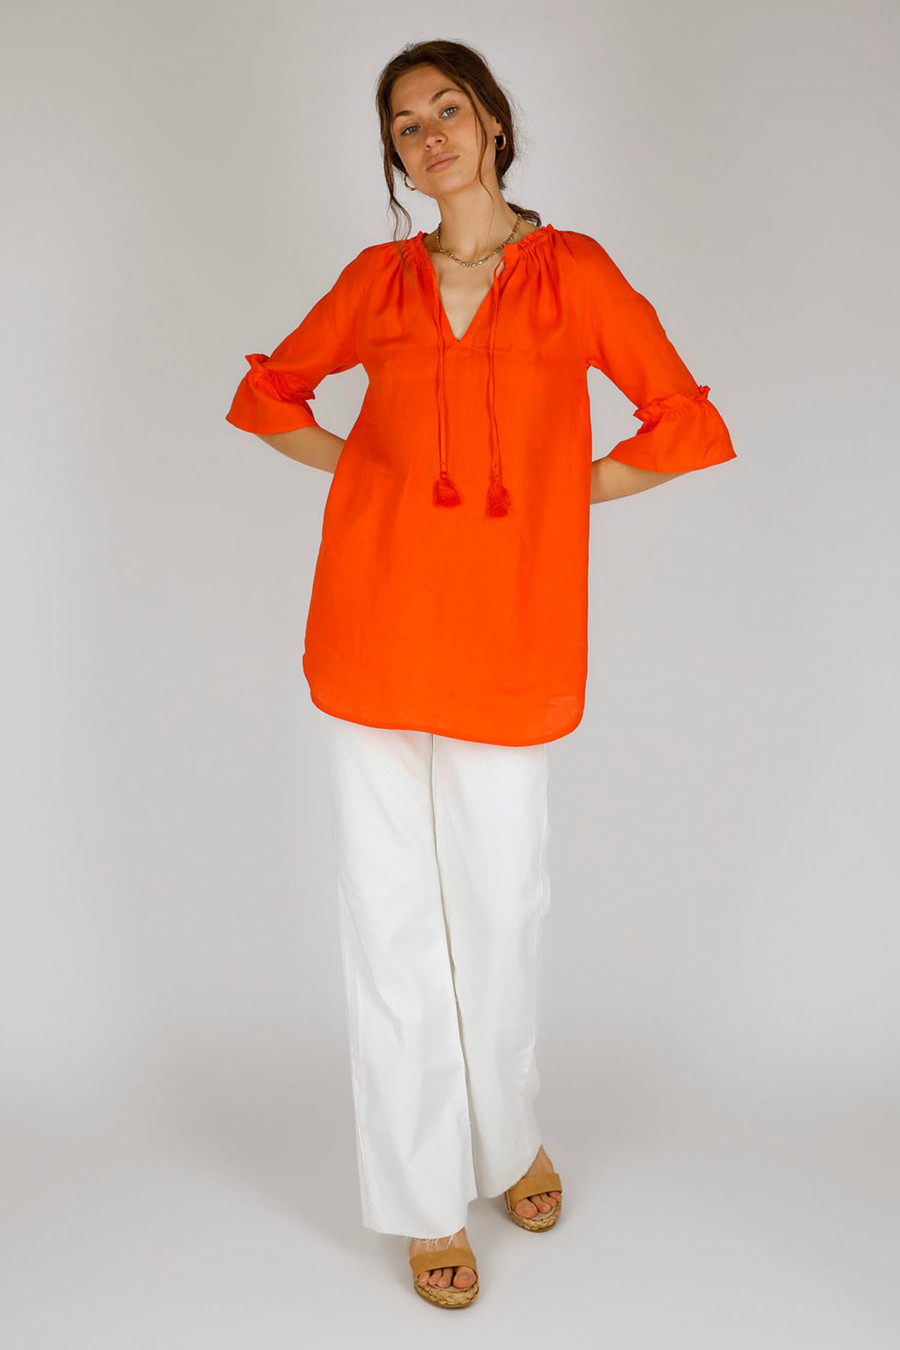 DANYA - Casual linen blouse in tunic form - Colour: Tomato